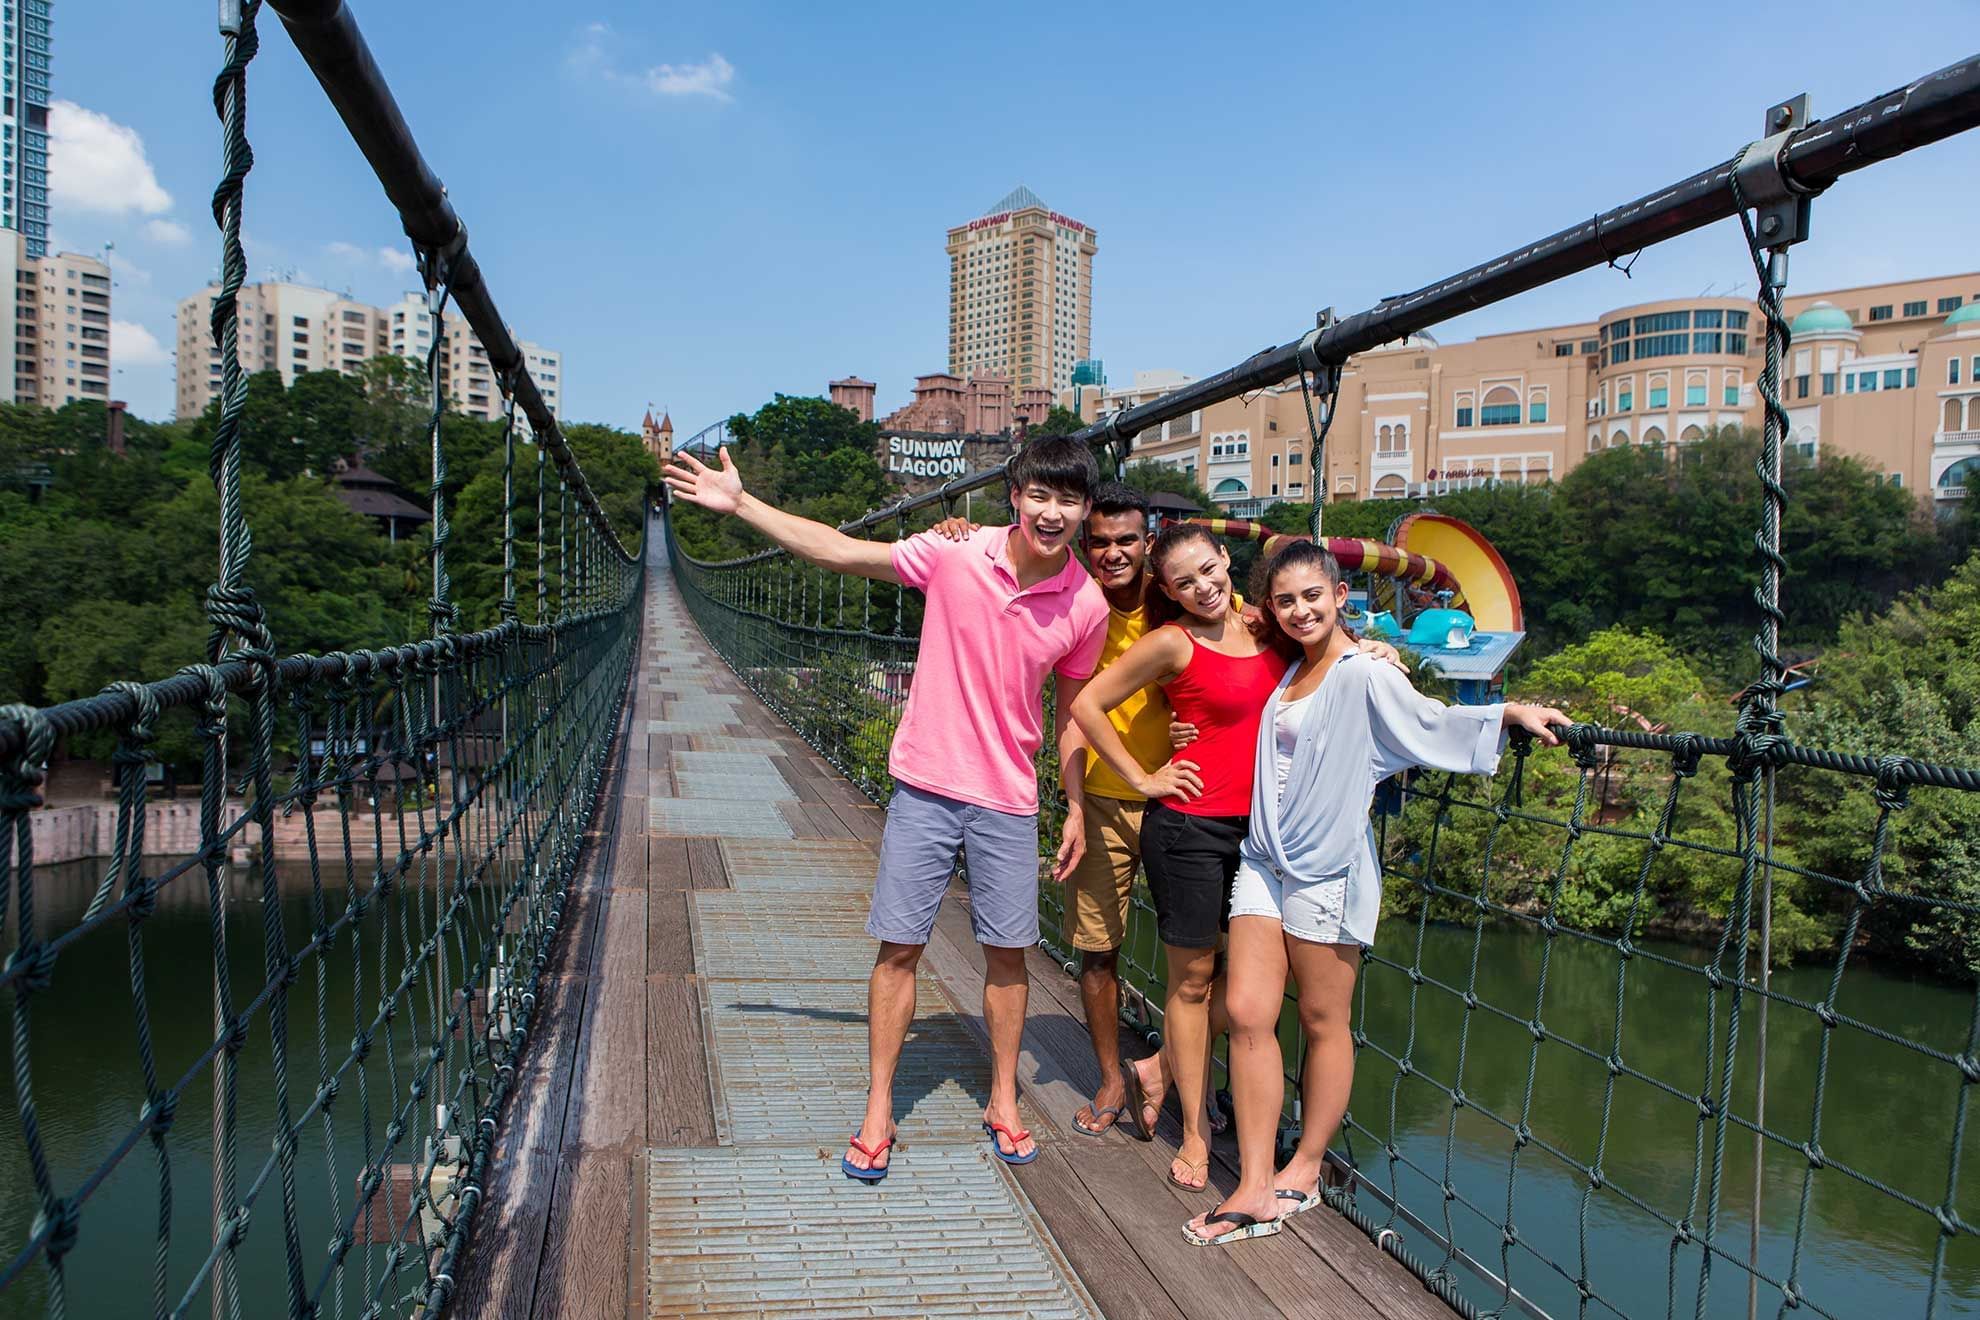 Friends posing on a Suspension Bridge near Sunway Hotel Pyramid